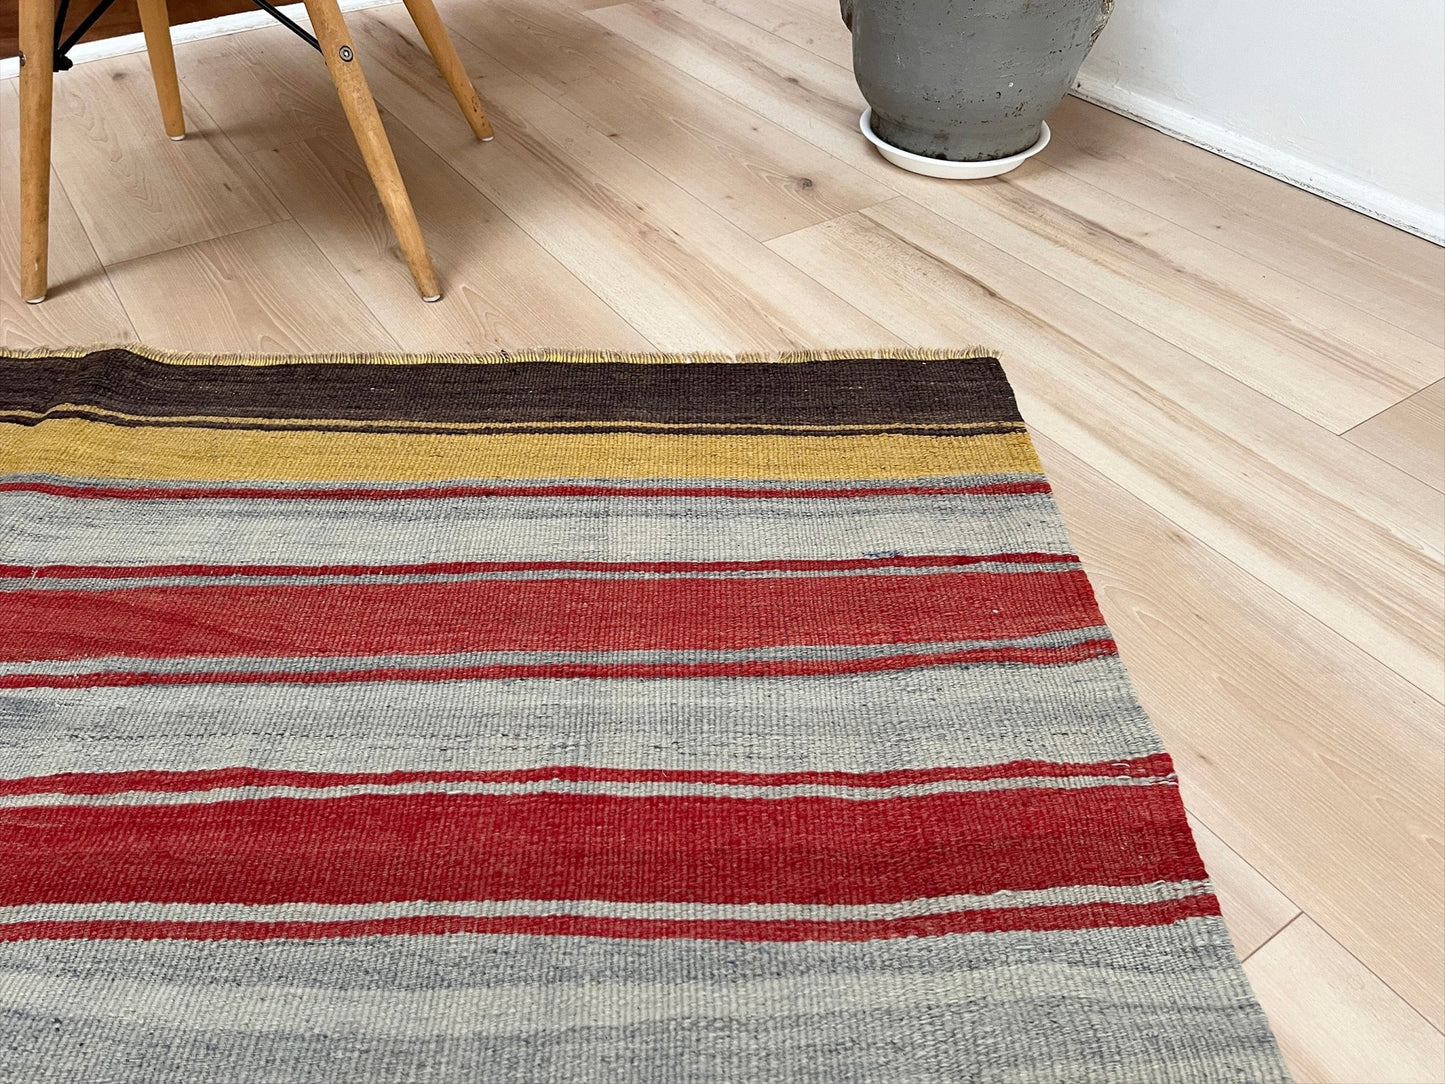 Striped flatweave wool rug. 5x7 turkish kilim rug shop san francisco bay area. Buy rug online free shipping.